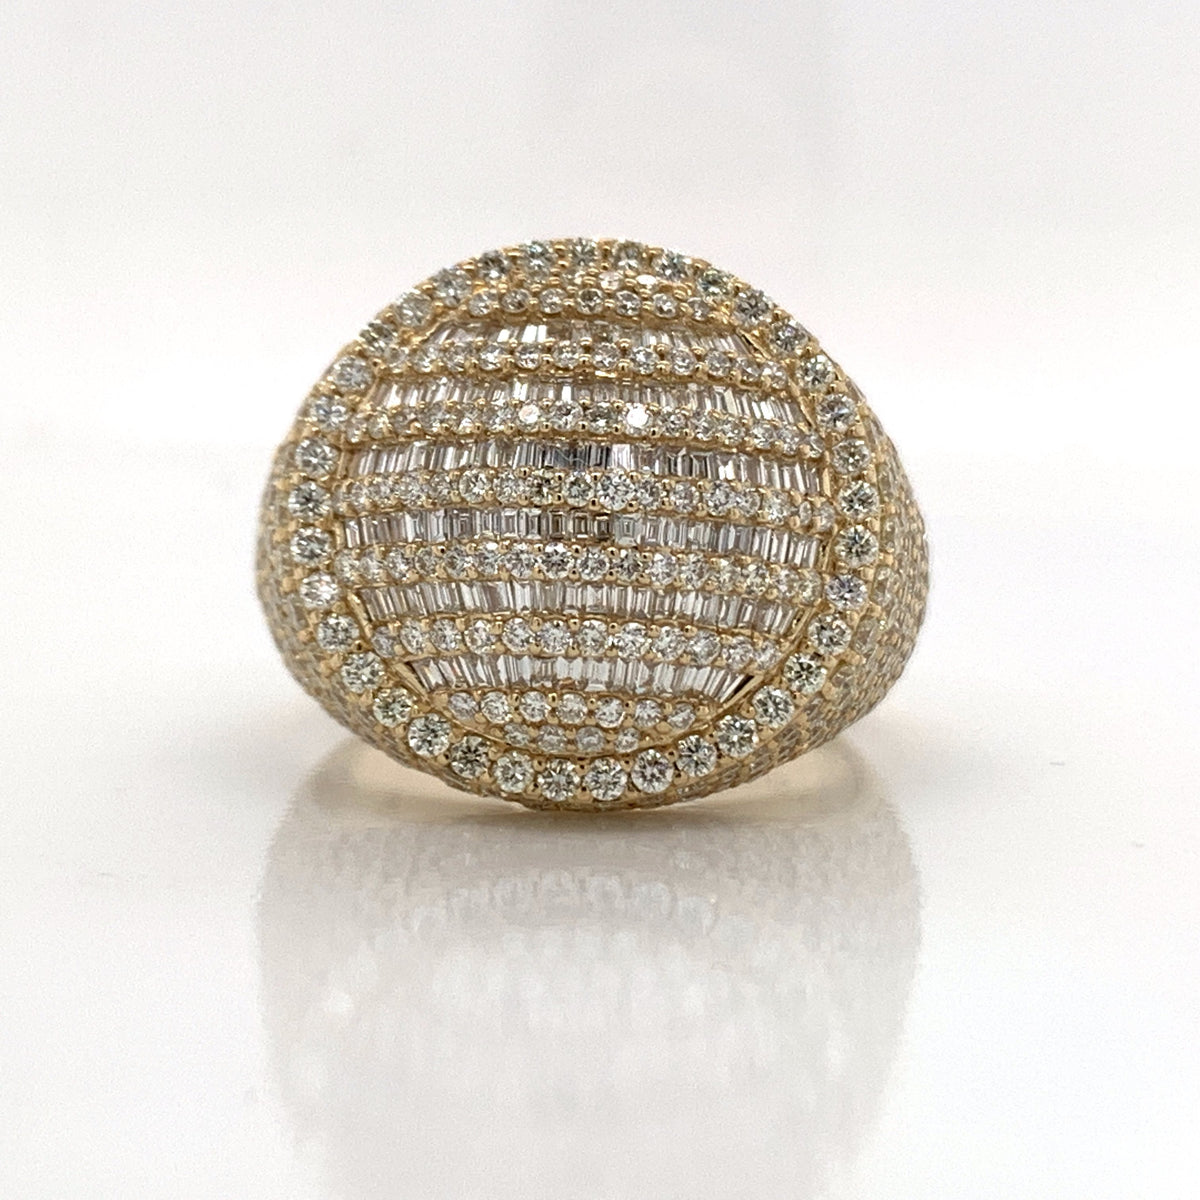 4.50 CT. Diamond Ring in 10K Gold - White Carat Diamonds 